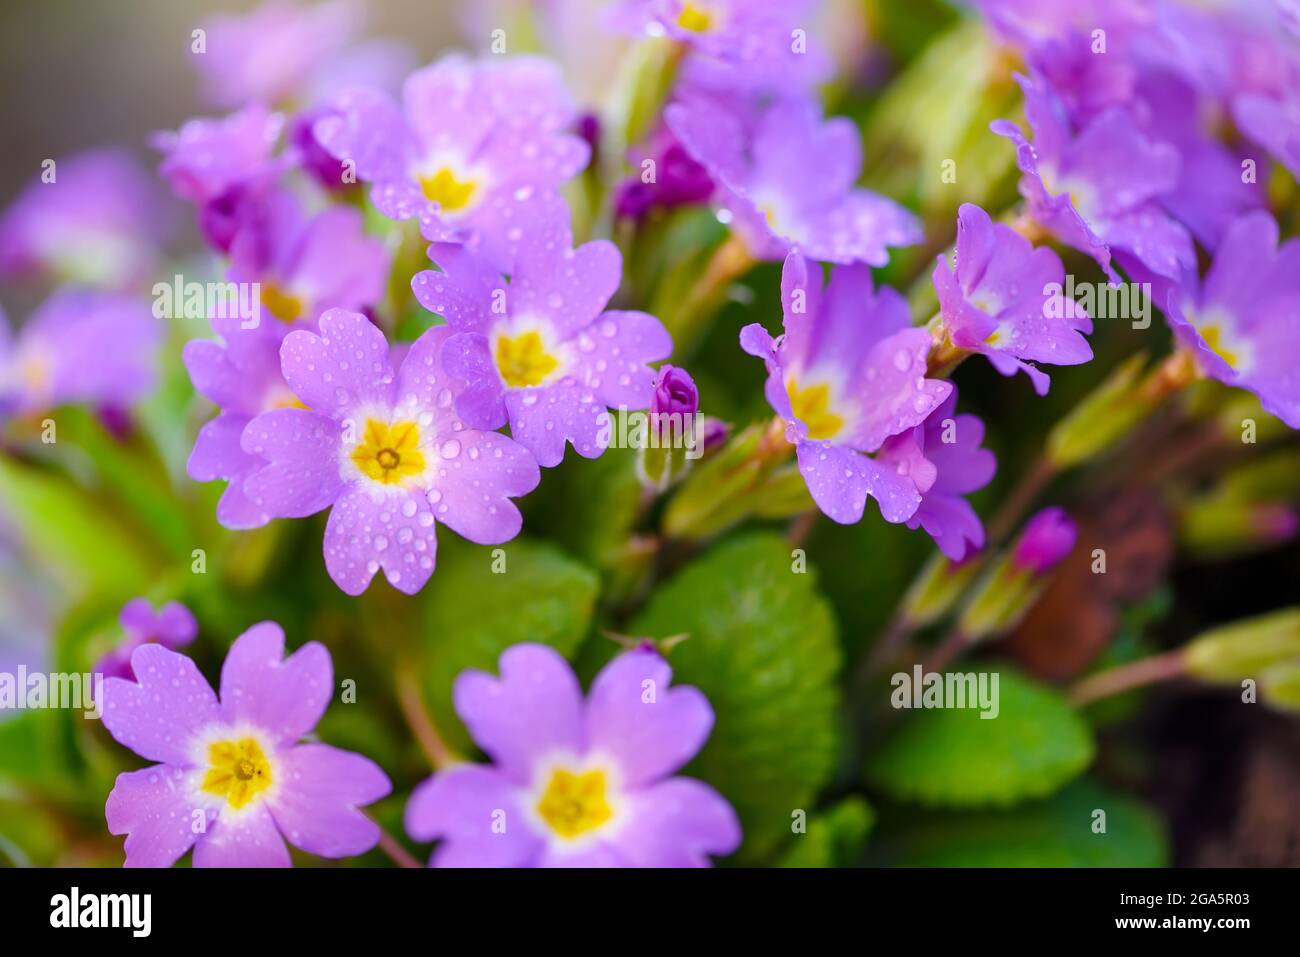 Spring flowers of Primula juliae (Julias Primrose) or purple primrose with dew drops in the spring garden. Stock Photo